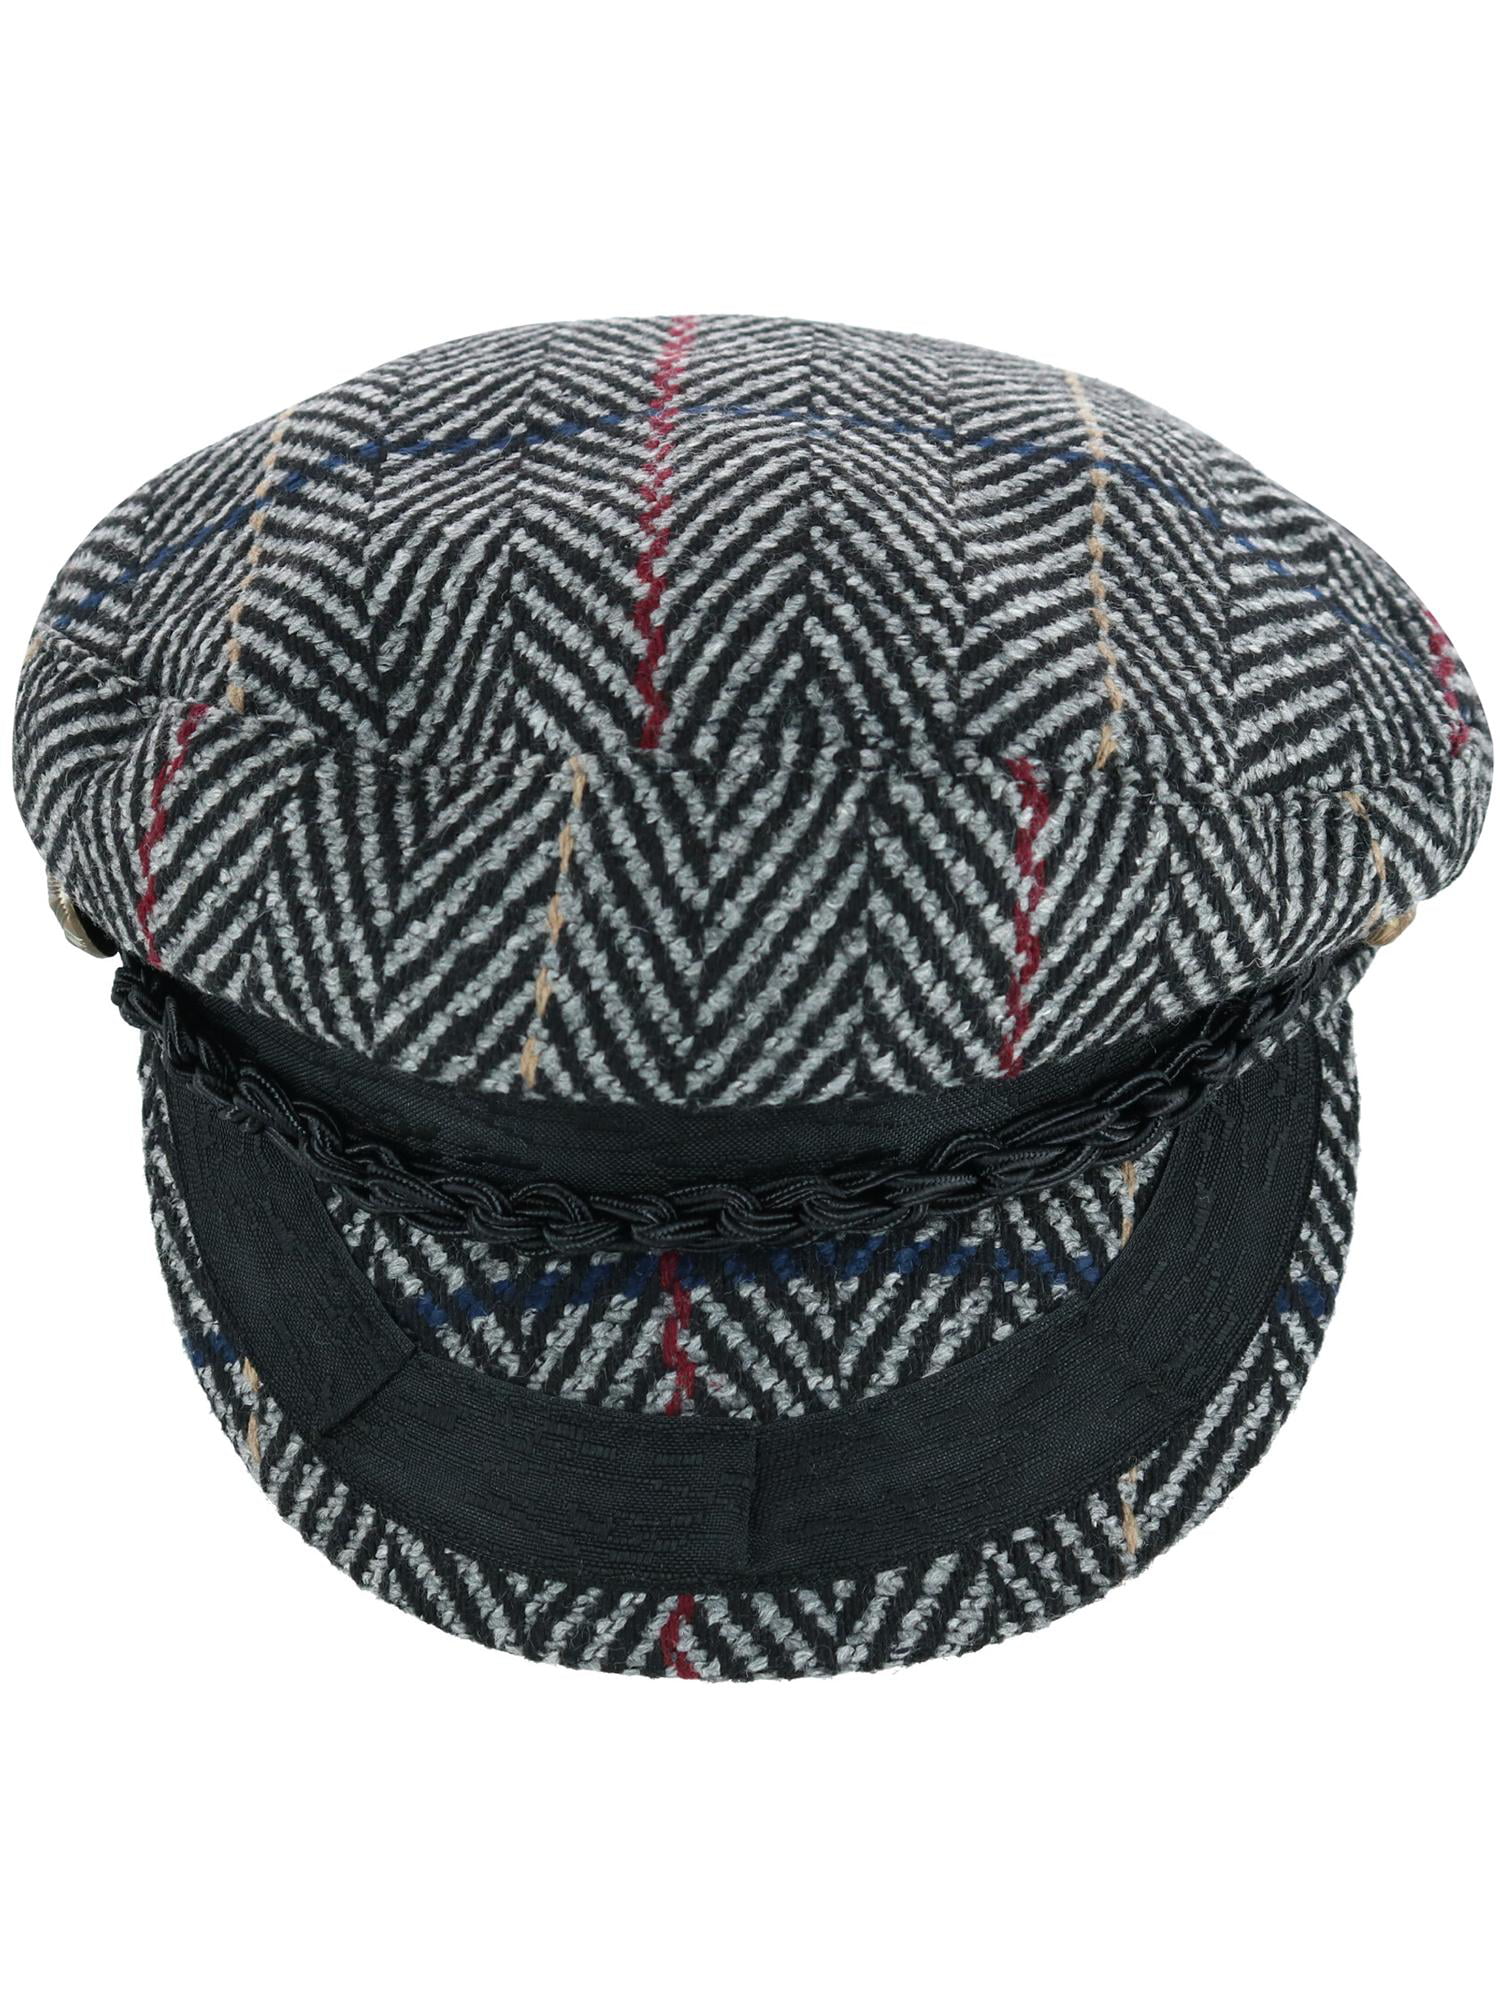 Trendy Apparel Shop Cotton Herringbone Texture Newsboy Greek Fisherman Hat 